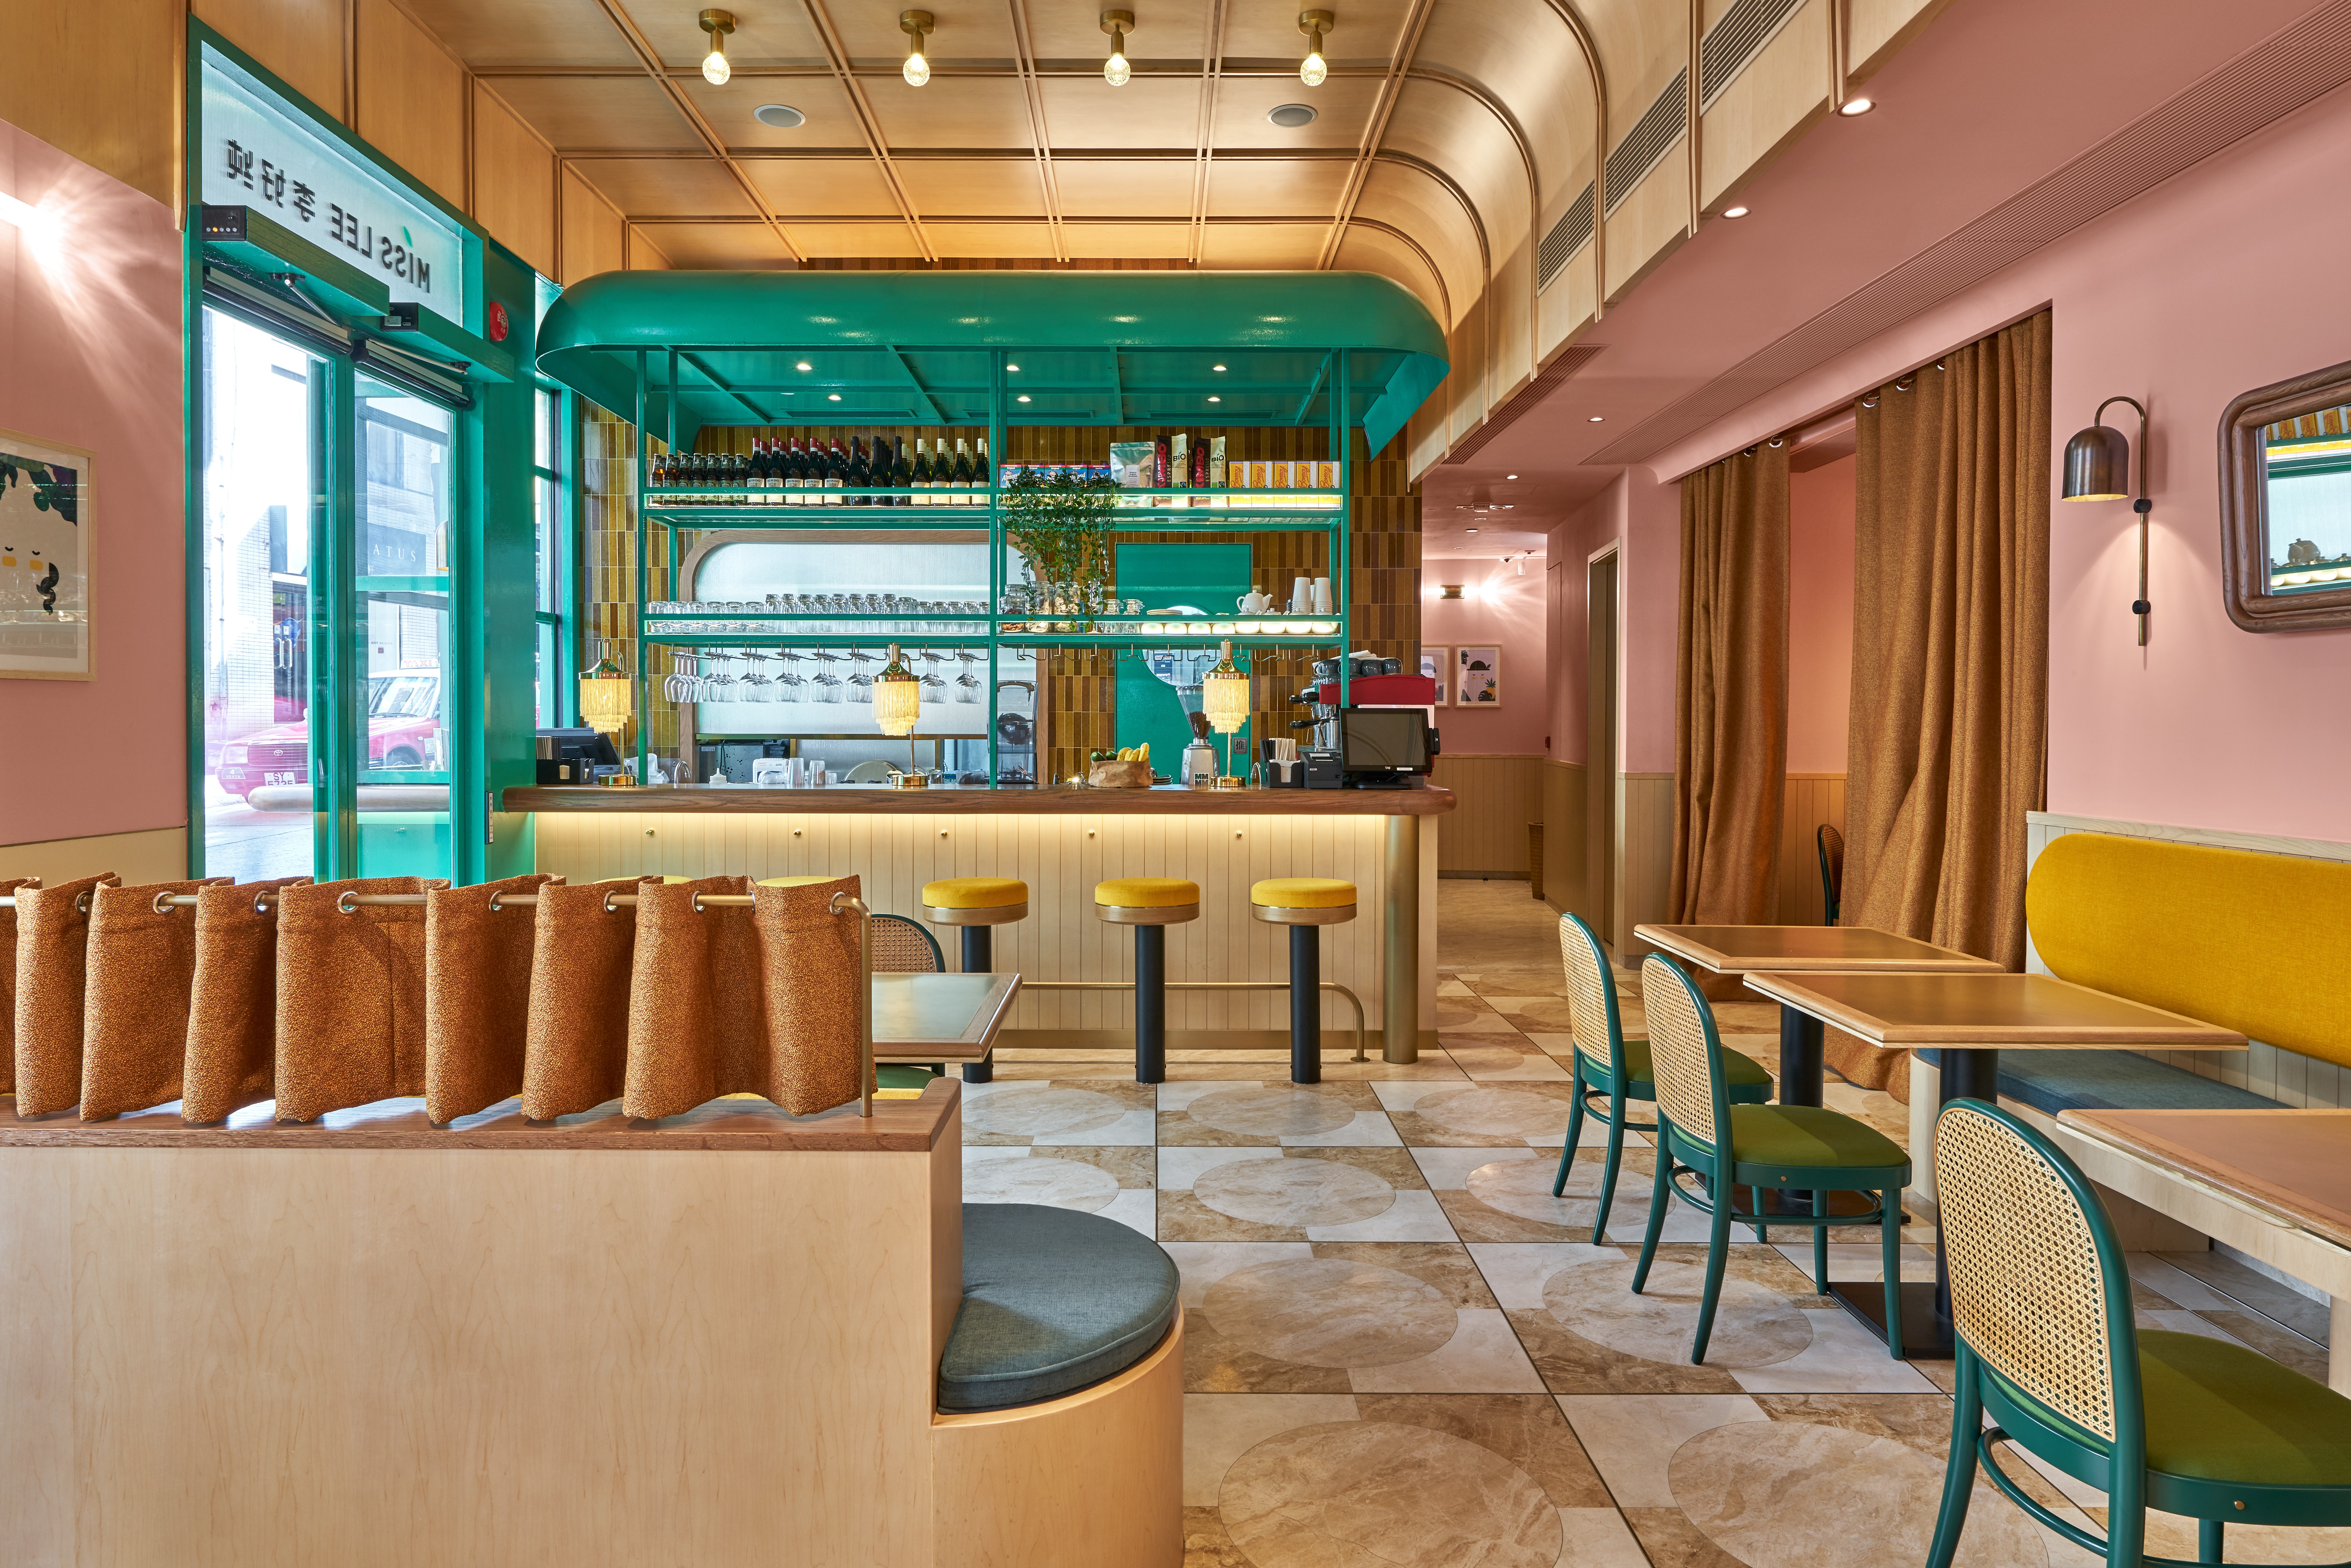 The interior of Miss Lee, a modern Cantonese vegetarian, vegan and gluten-free restaurant designed by JJ Acuna / Bespoke Studio.